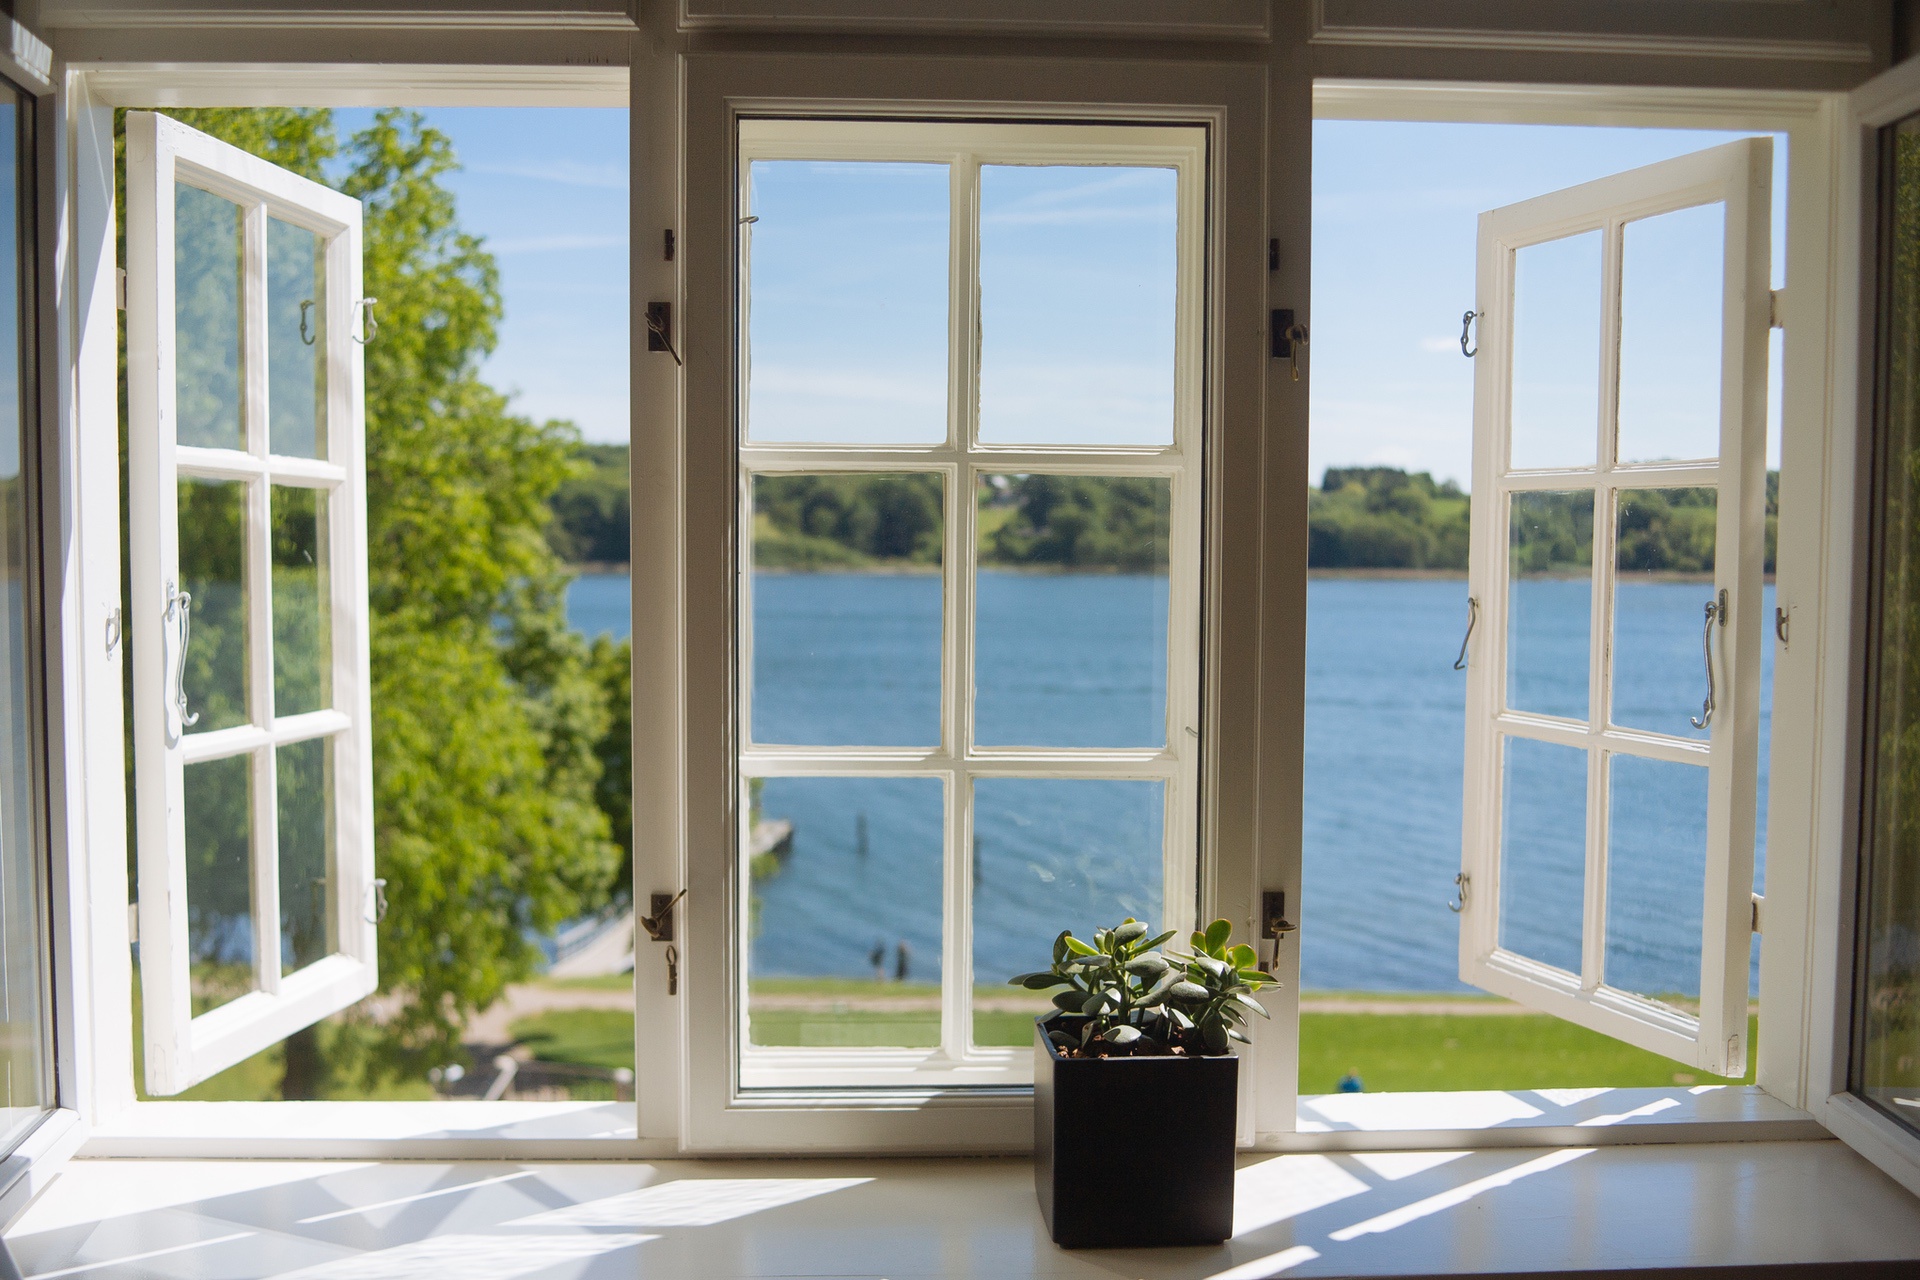 Open windows overlooking a lake